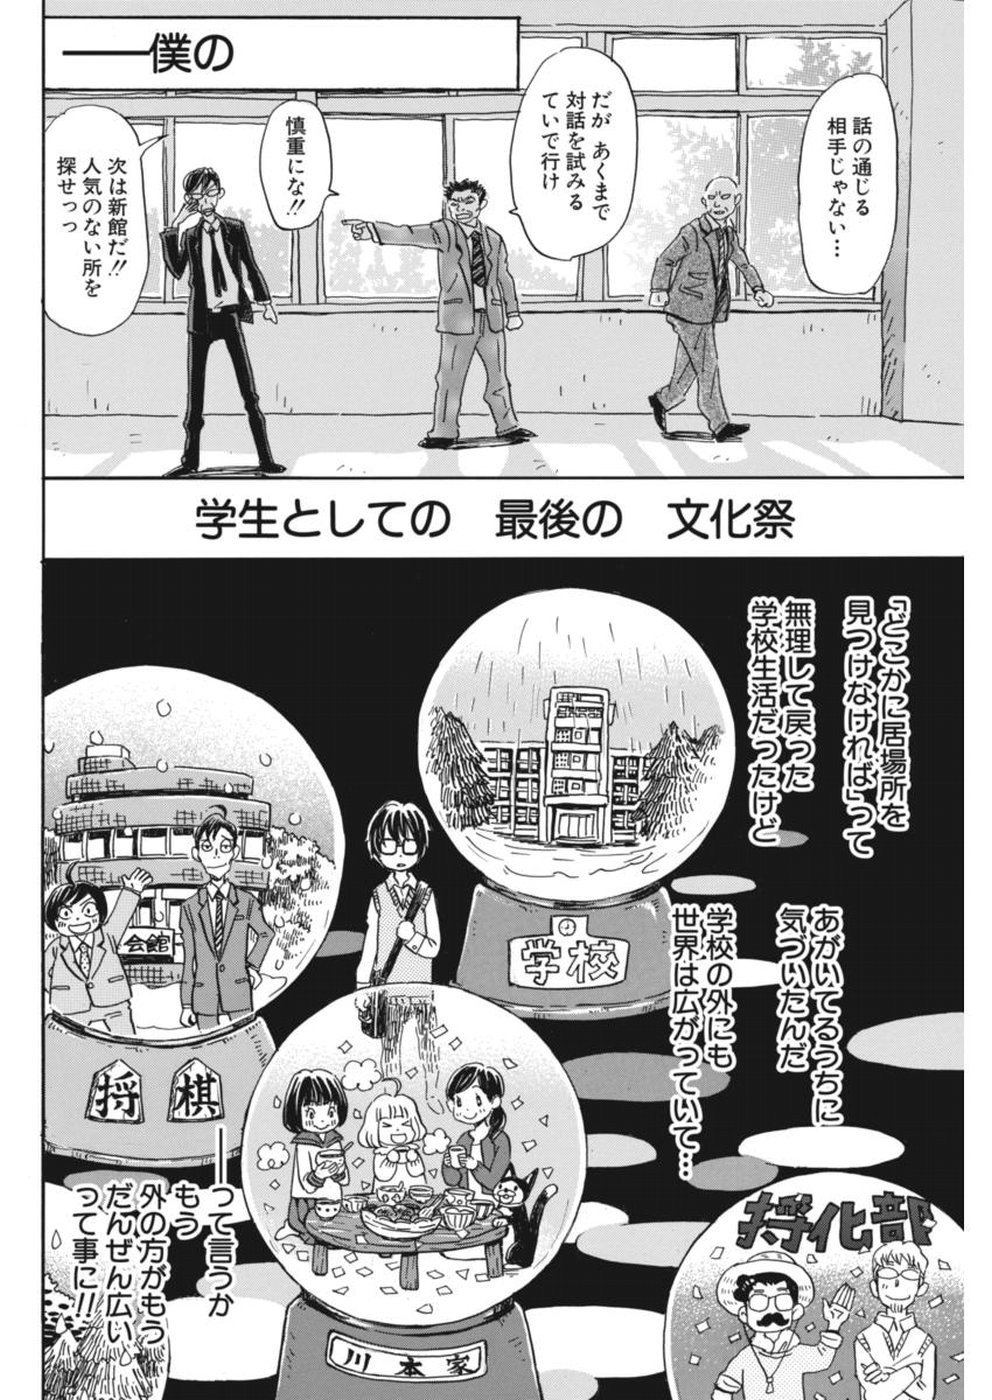 3 Gatsu no Lion - Chapter 148 - Page 4